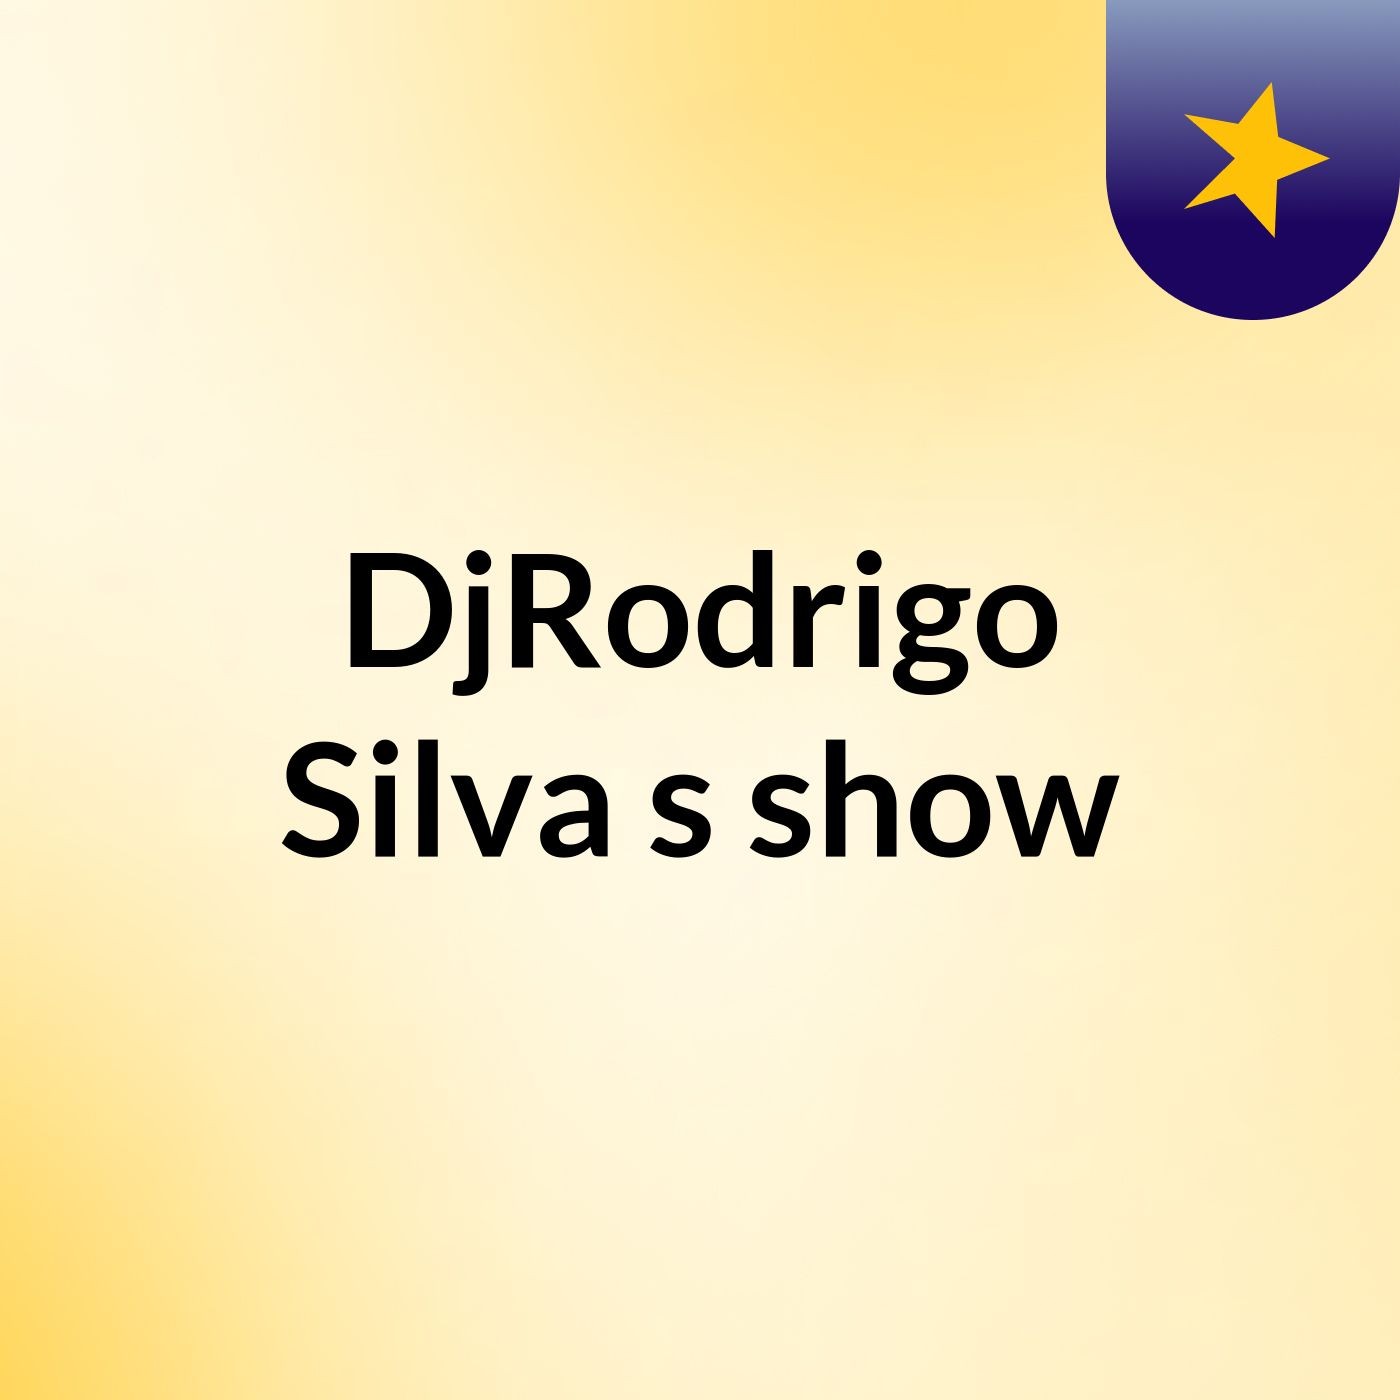 DjRodrigo Silva's show